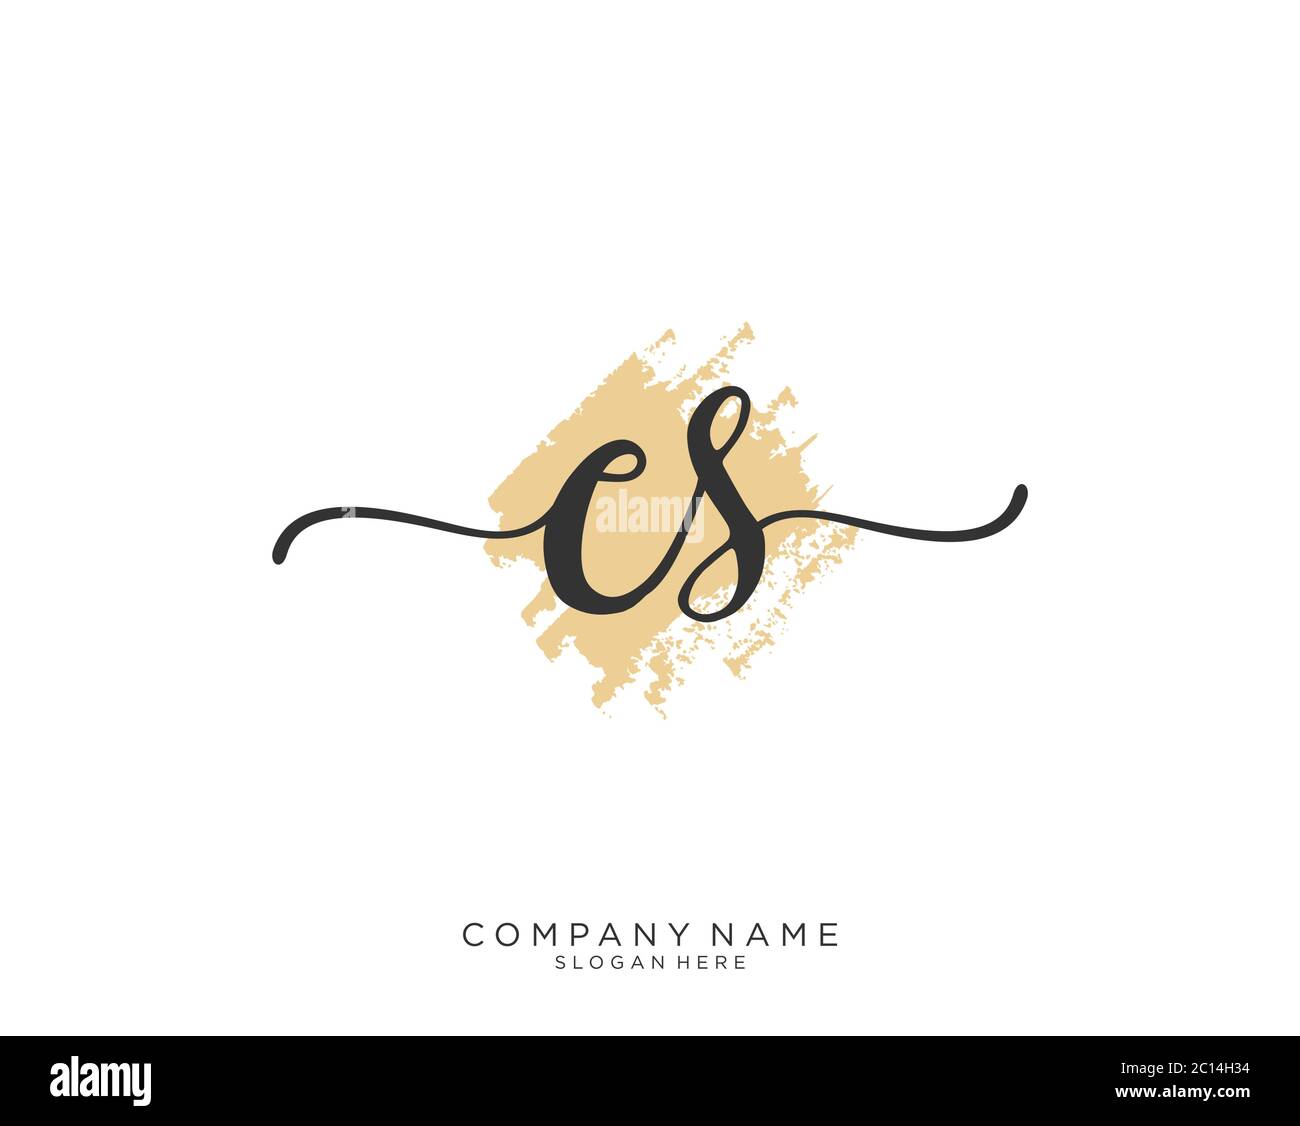 CS Initial handwriting logo vector Stock Vector